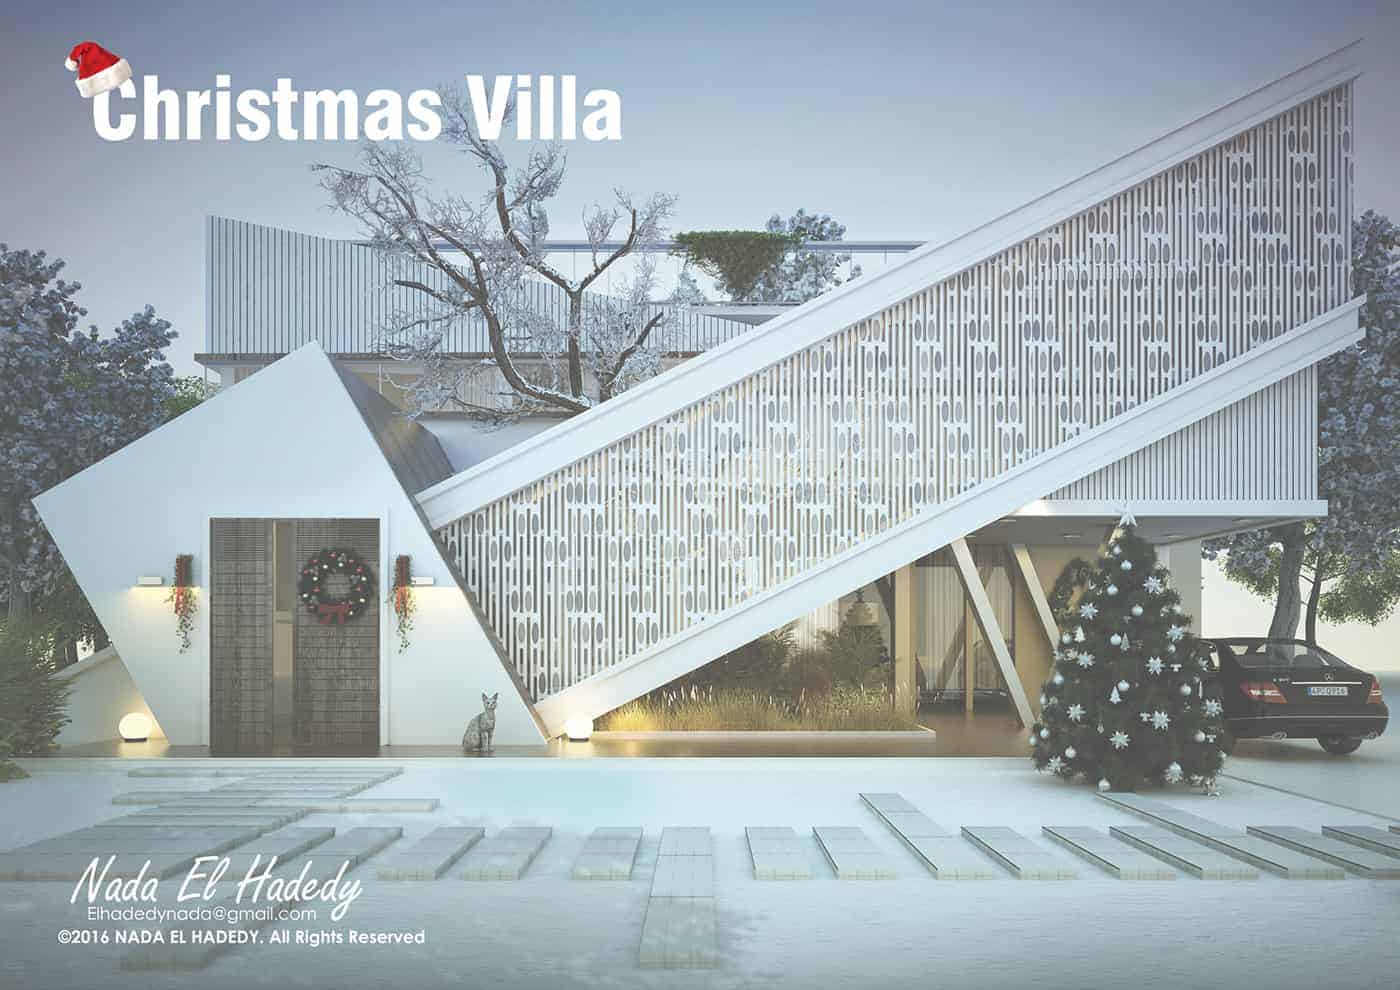 The Christmas Villa